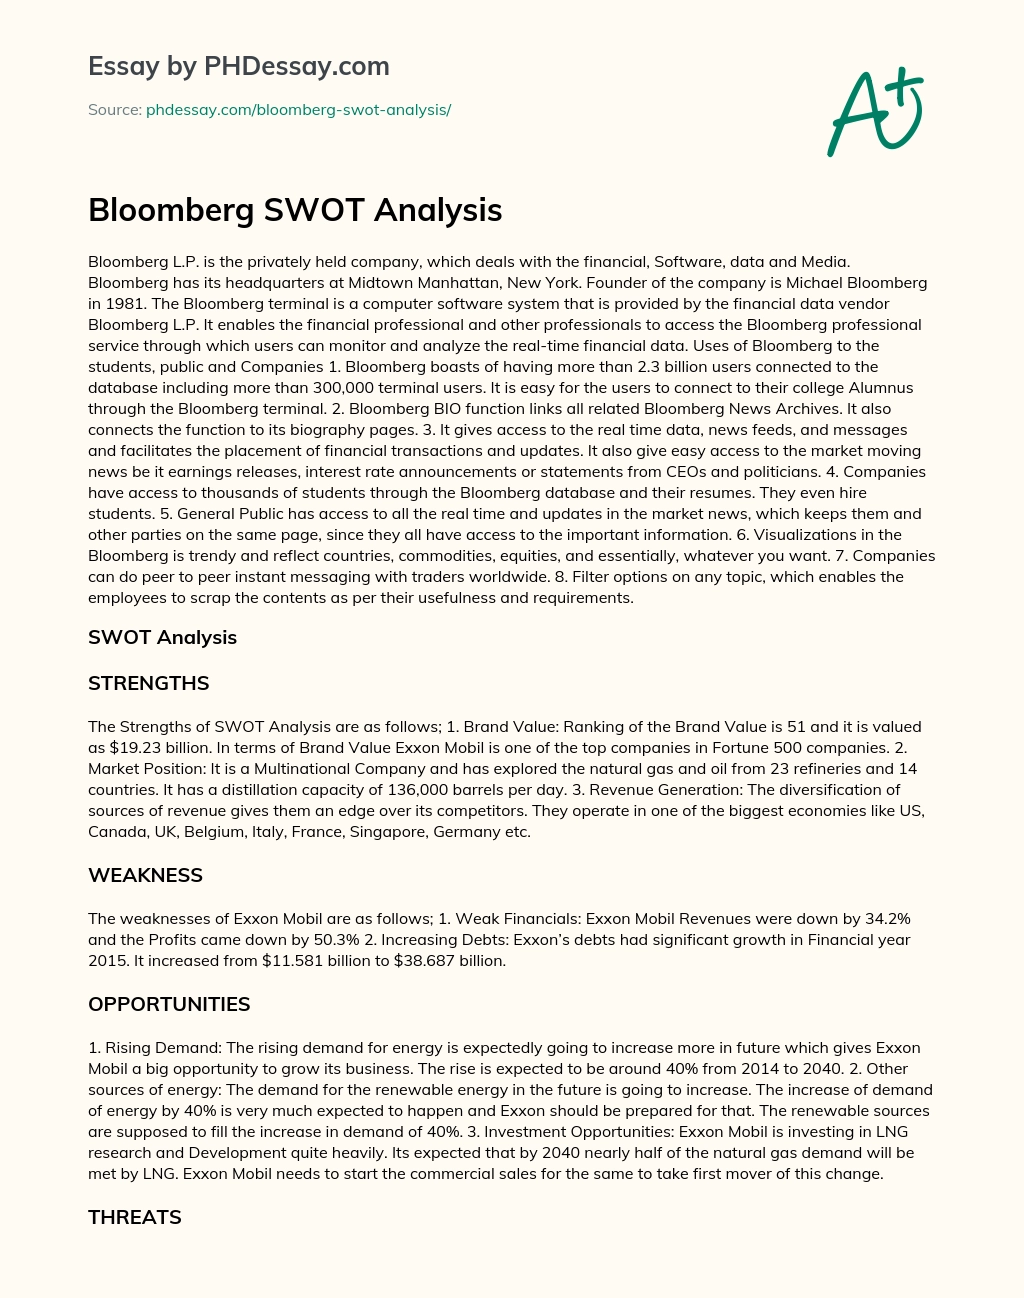 Bloomberg SWOT Analysis essay